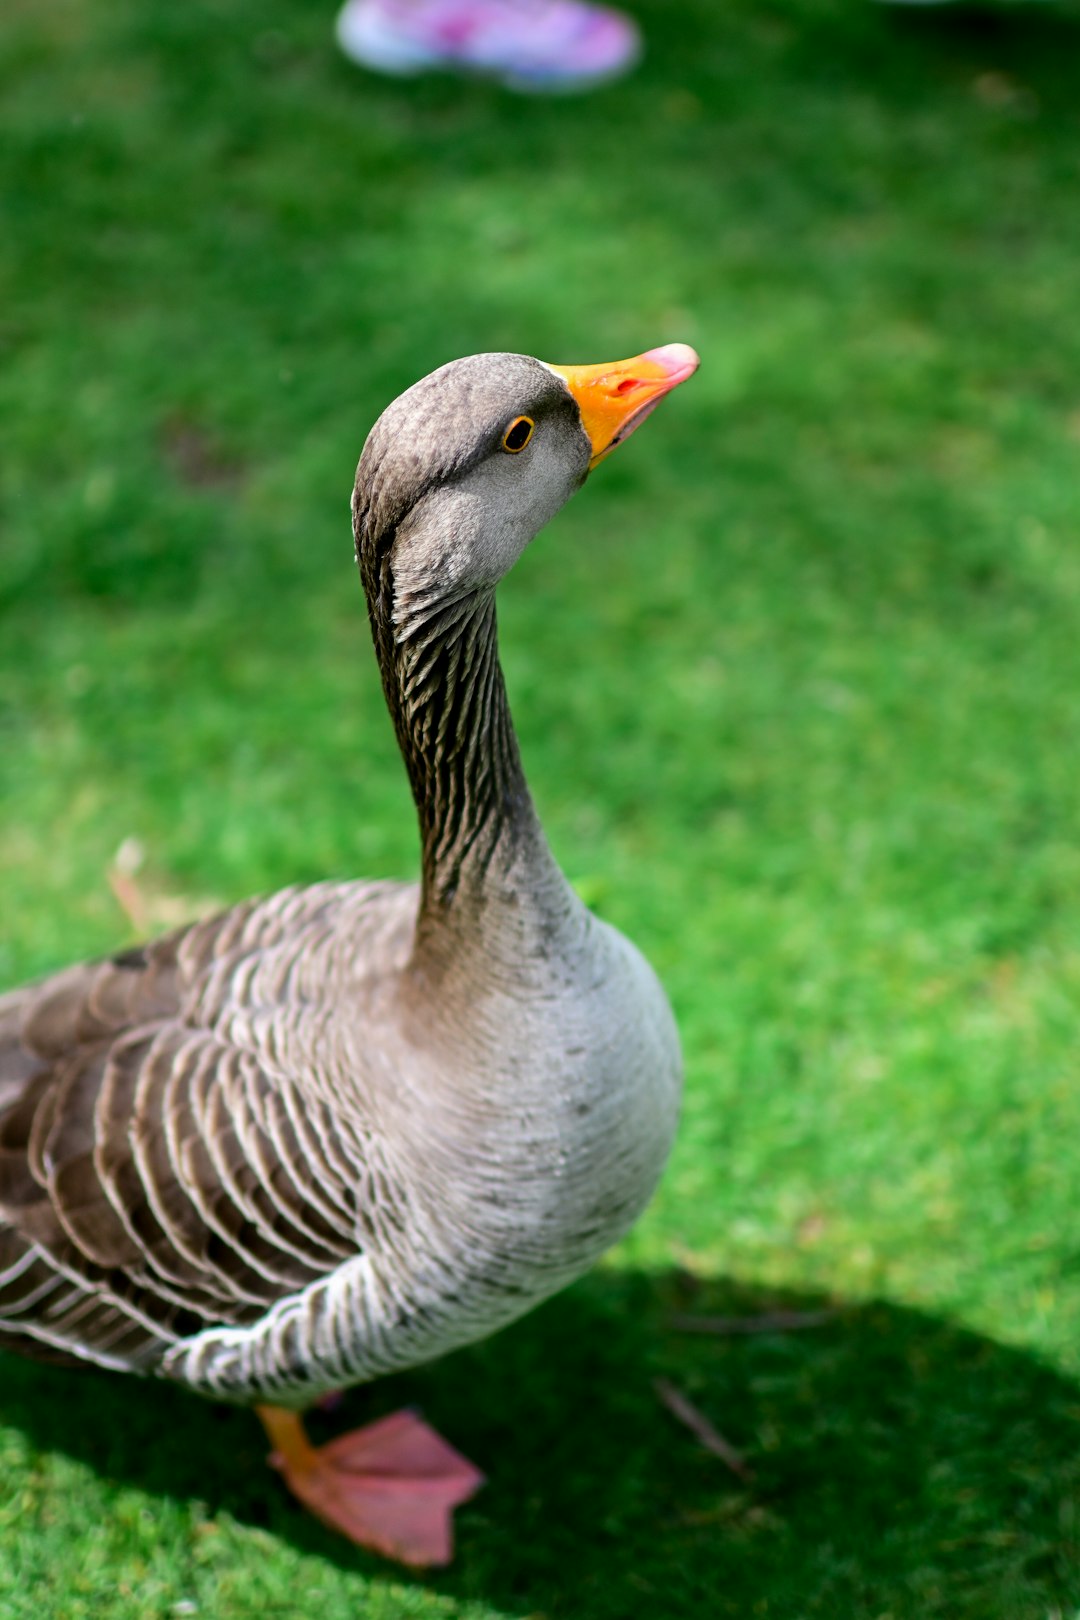 A Greylag goose in St James's Park